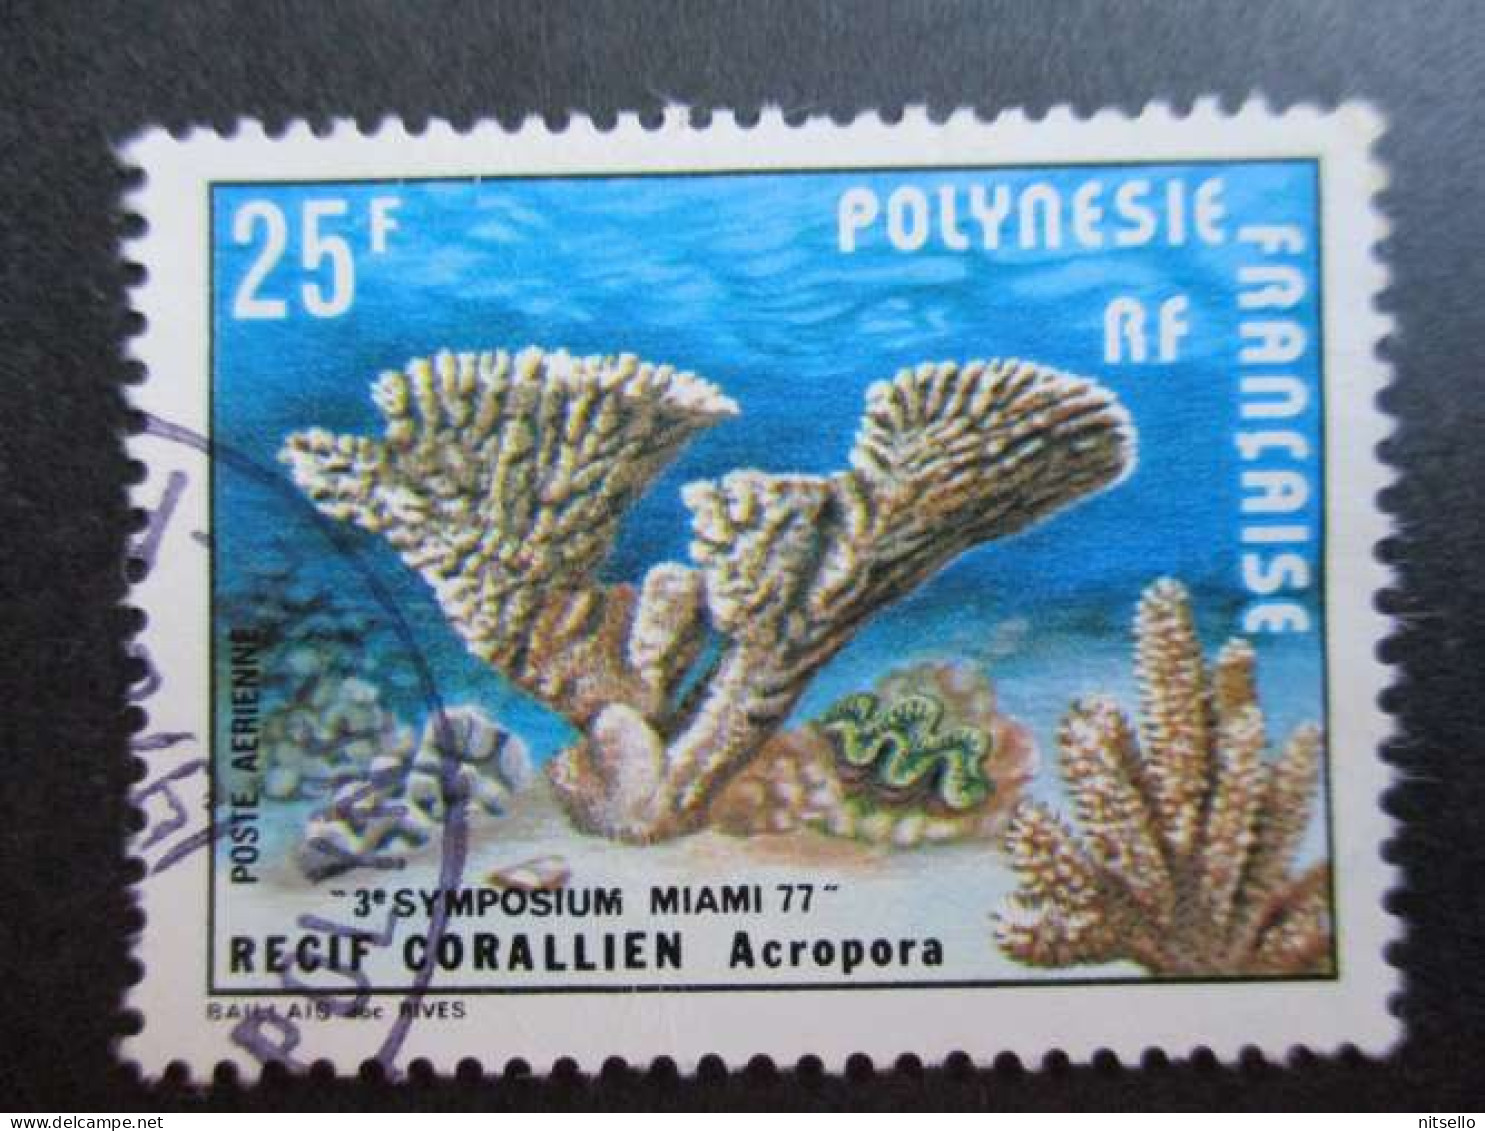 LOTE 2202A ///  (C030)  POLINESIA FRANCESA  - YVERT Nº: C AEREO 121 OBL 1977 ¡¡¡ OFERTA - LIQUIDATION - JE LIQUIDE !!! - Used Stamps